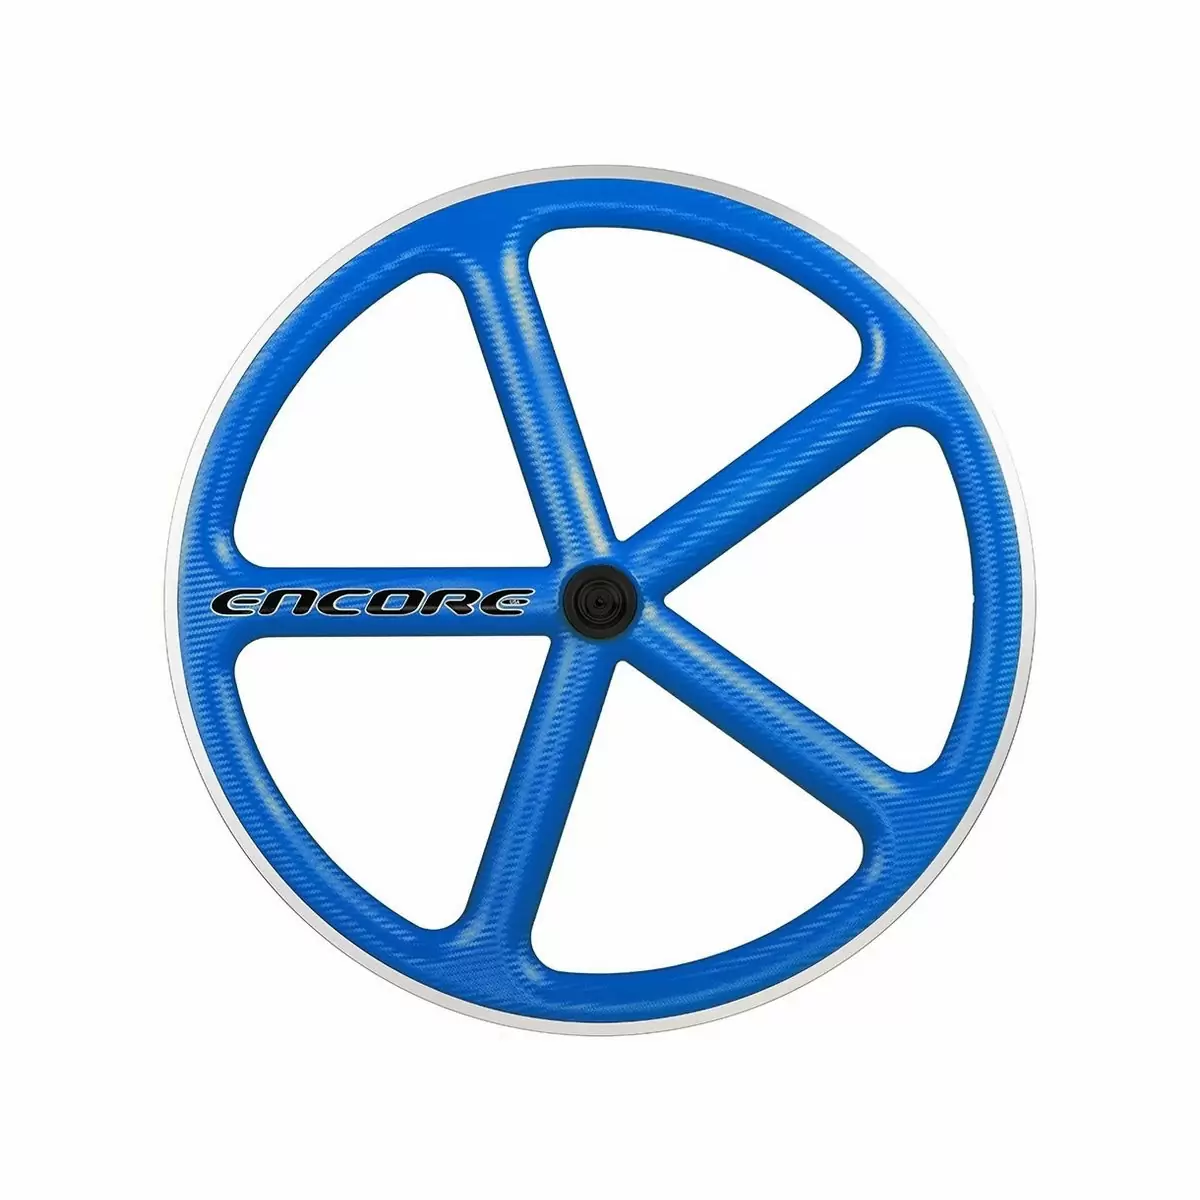 rear wheel 700c track 5 spokes carbon weave blue msw - image